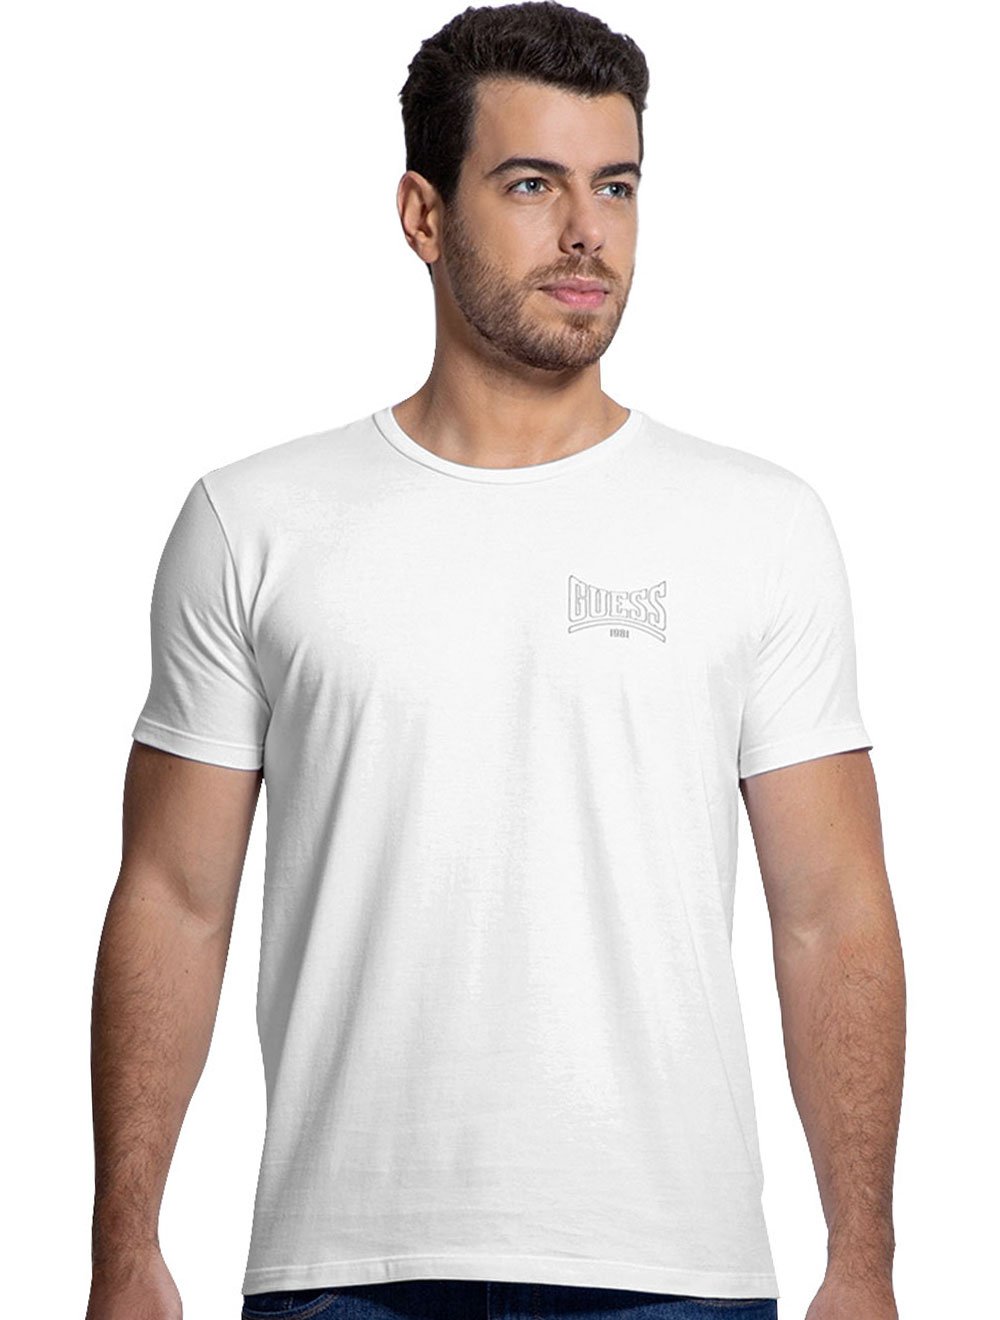 Camiseta Guess Masculina Arc Silk Chess Logo Branca